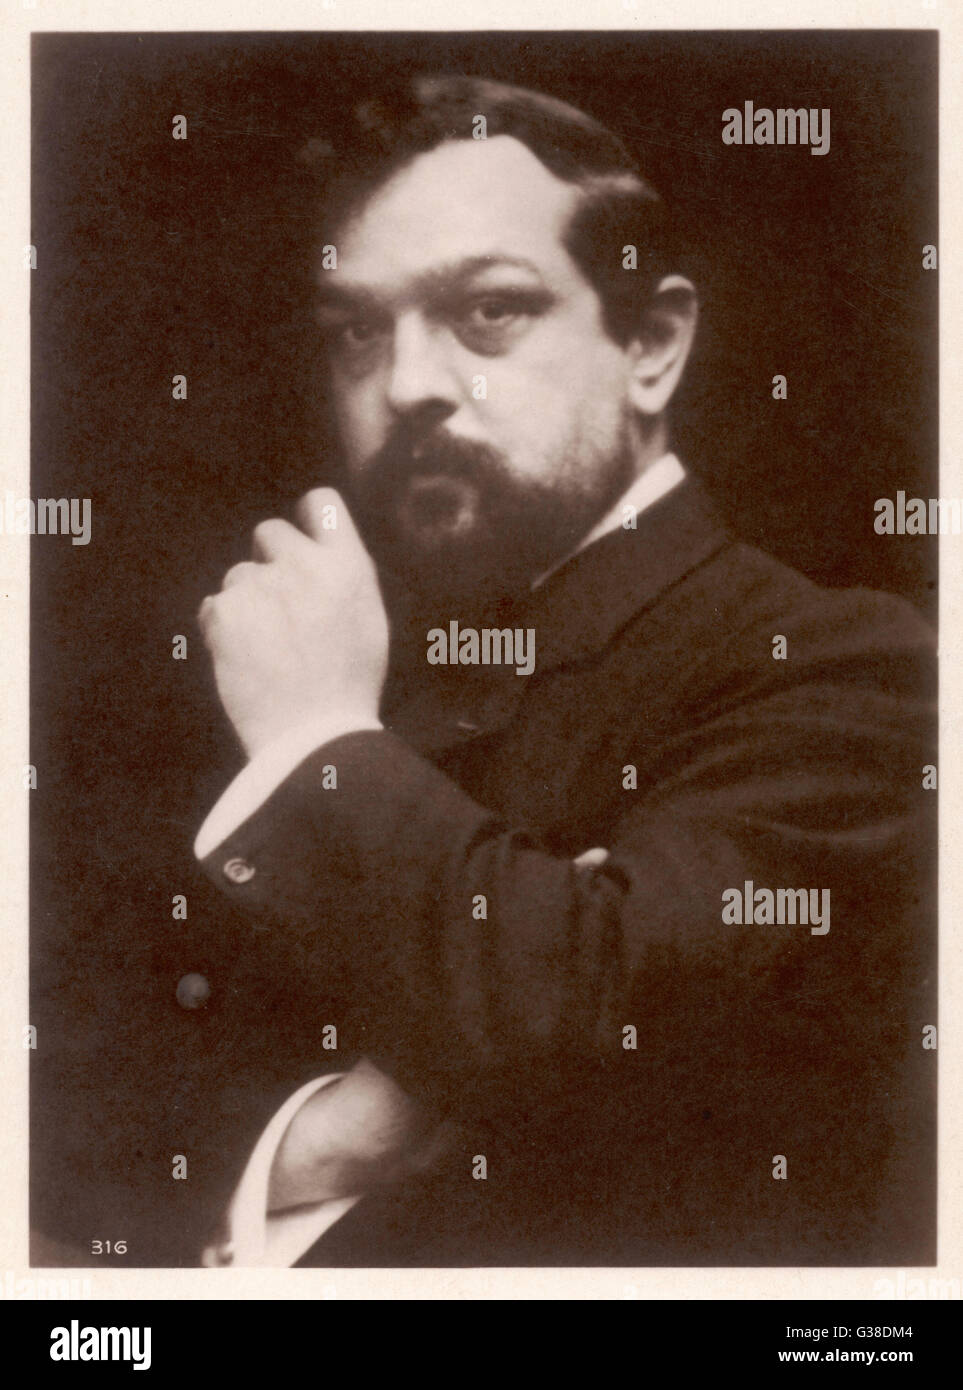 CLAUDE Debussy Compositor francés. Fecha: 1862 - 1918 Foto de stock